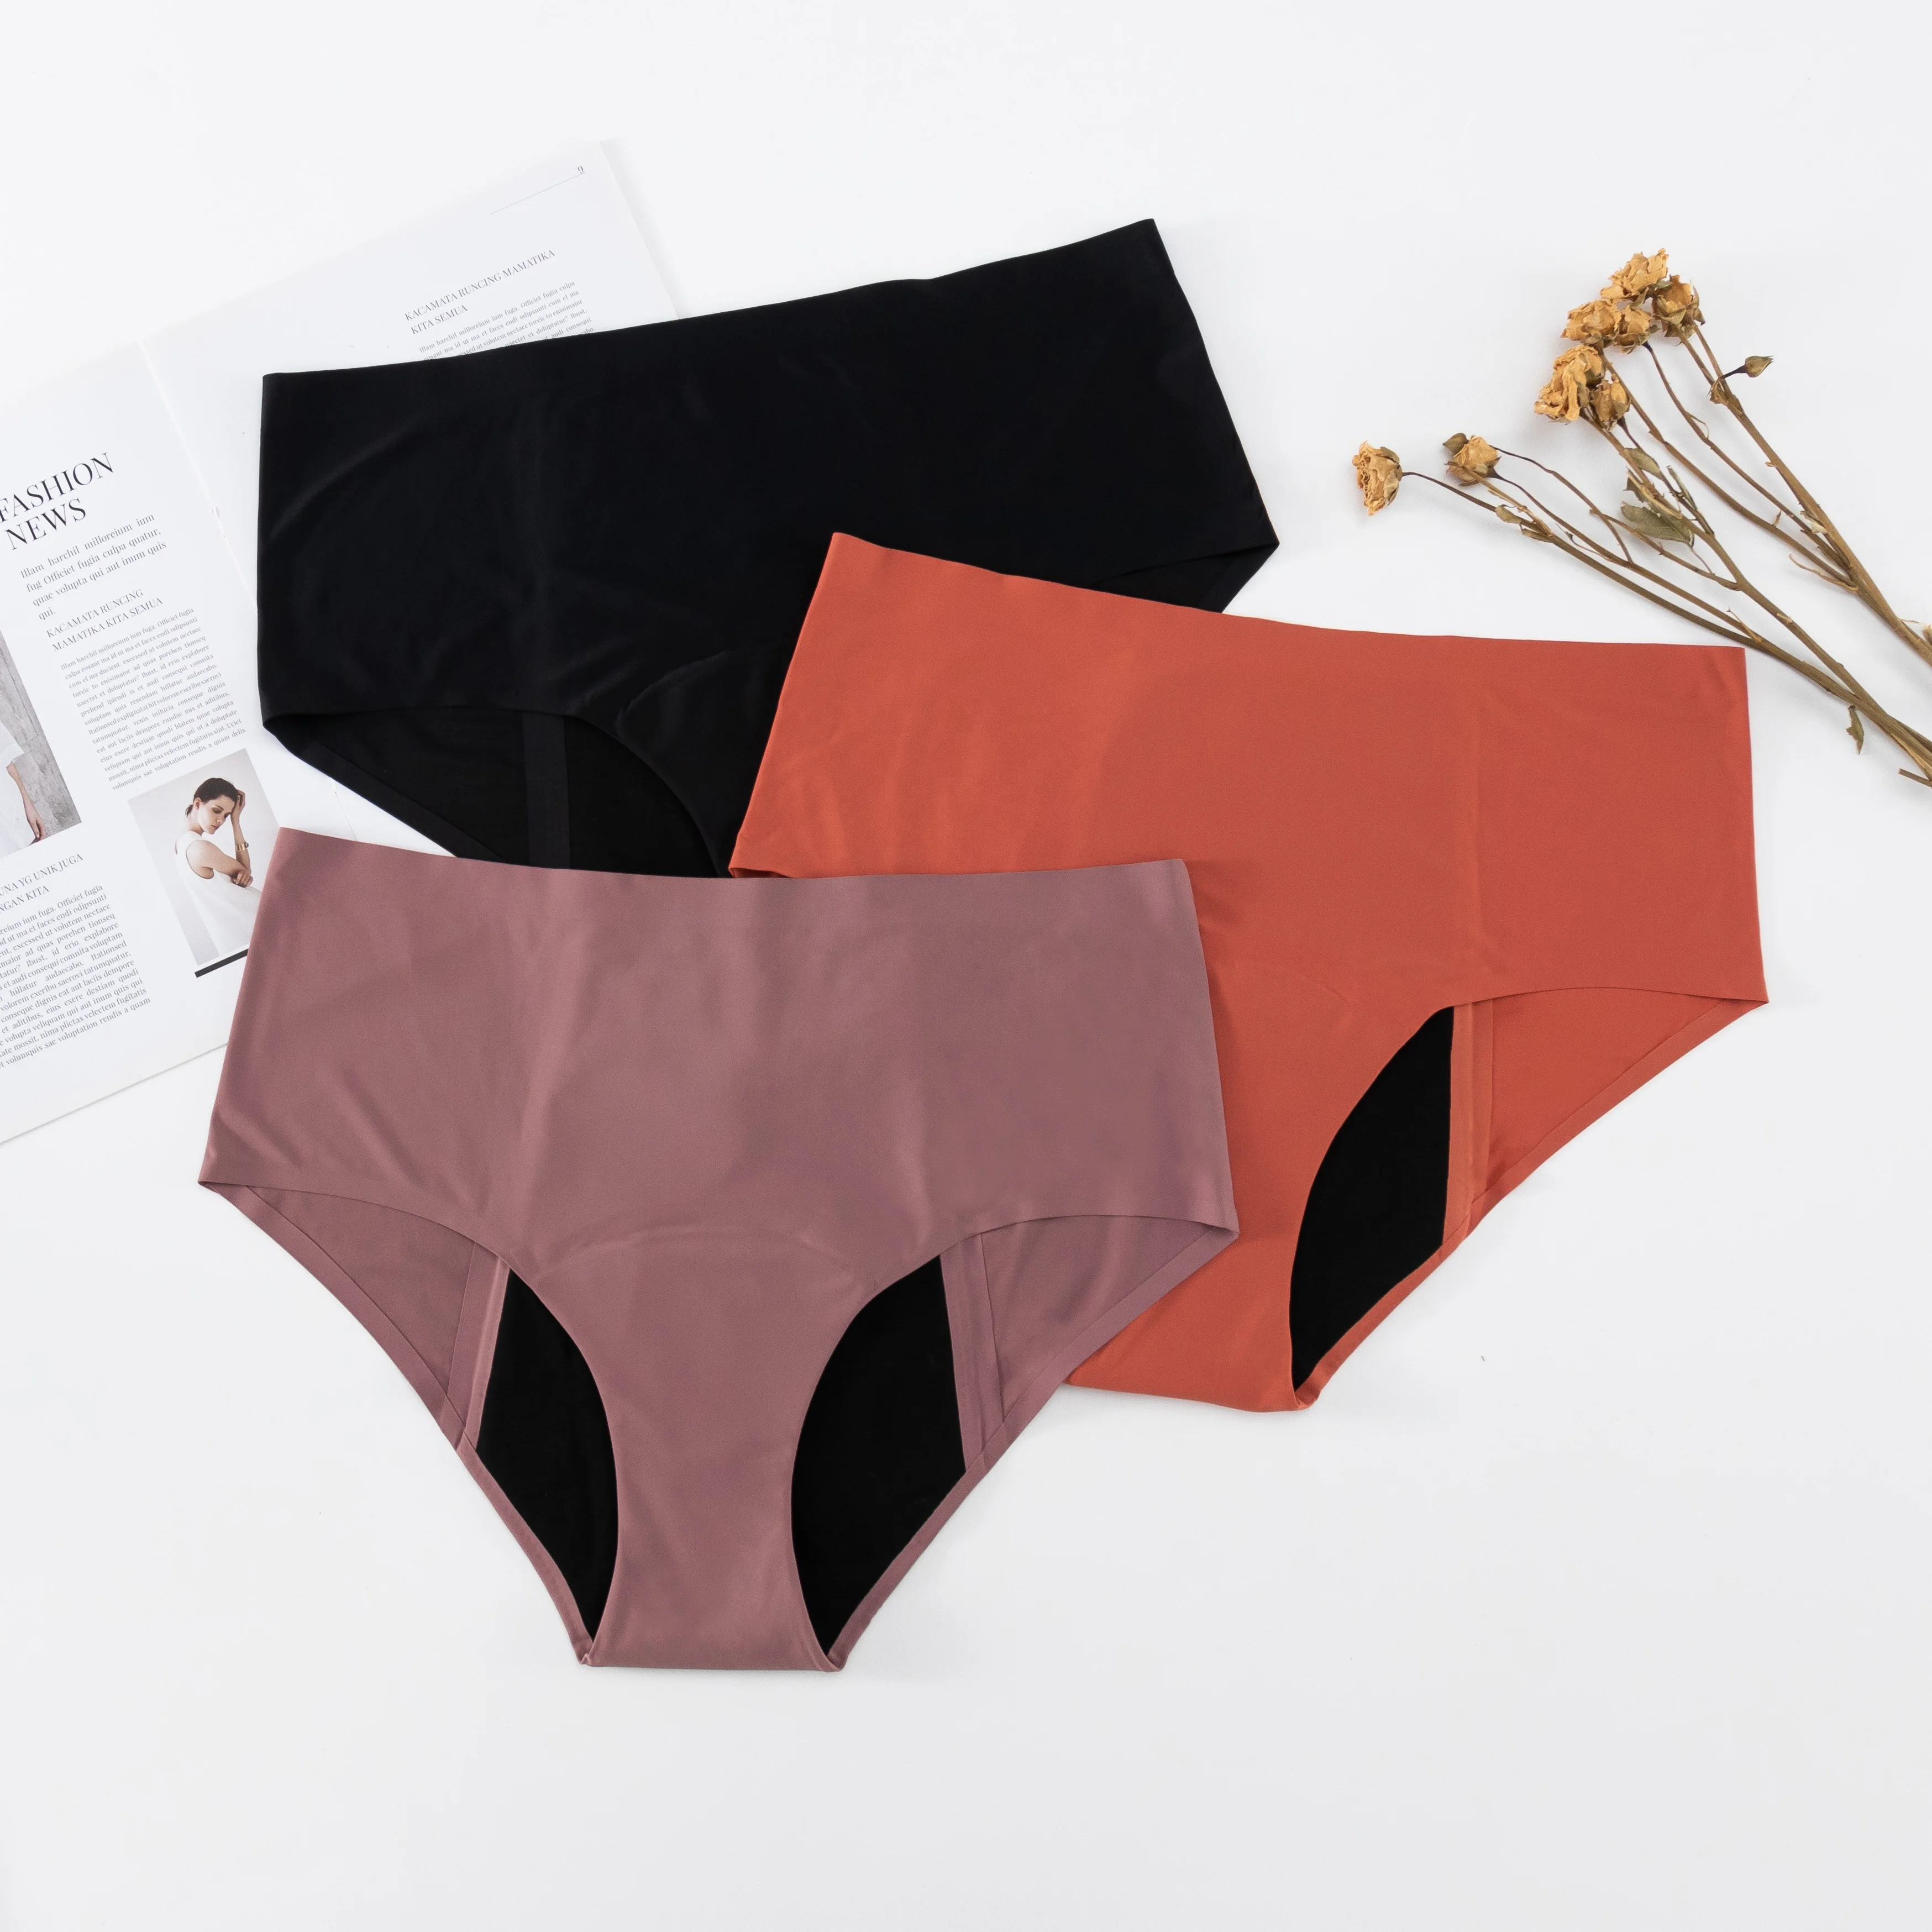 

Intiflower PL9676 Period Underwear for Women Heavy Flow High Elastic Seamless Menstrual Panties with 4 Layers